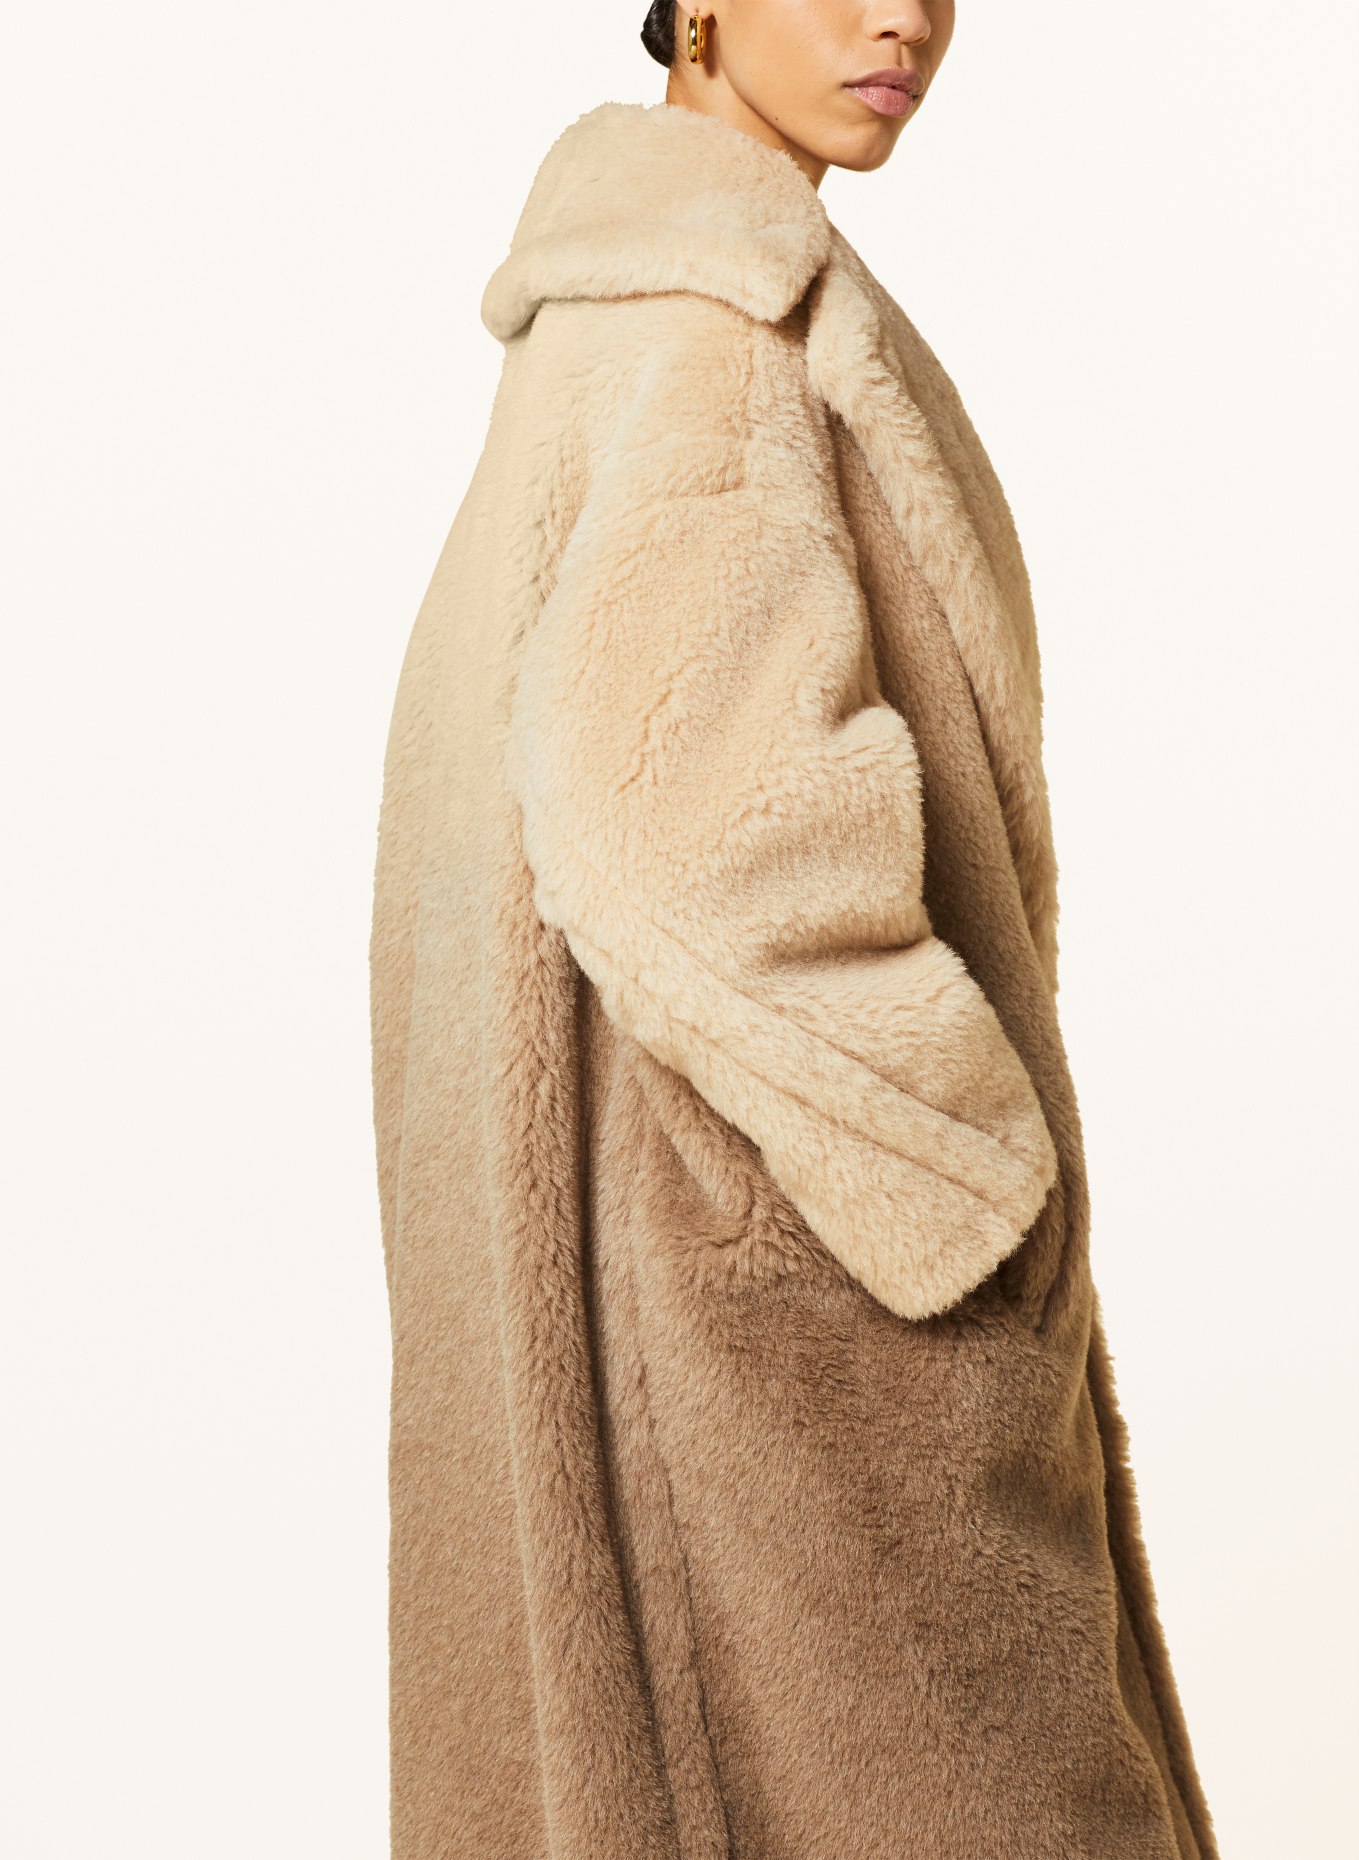 Camel hair teddy coat in beige - Max Mara